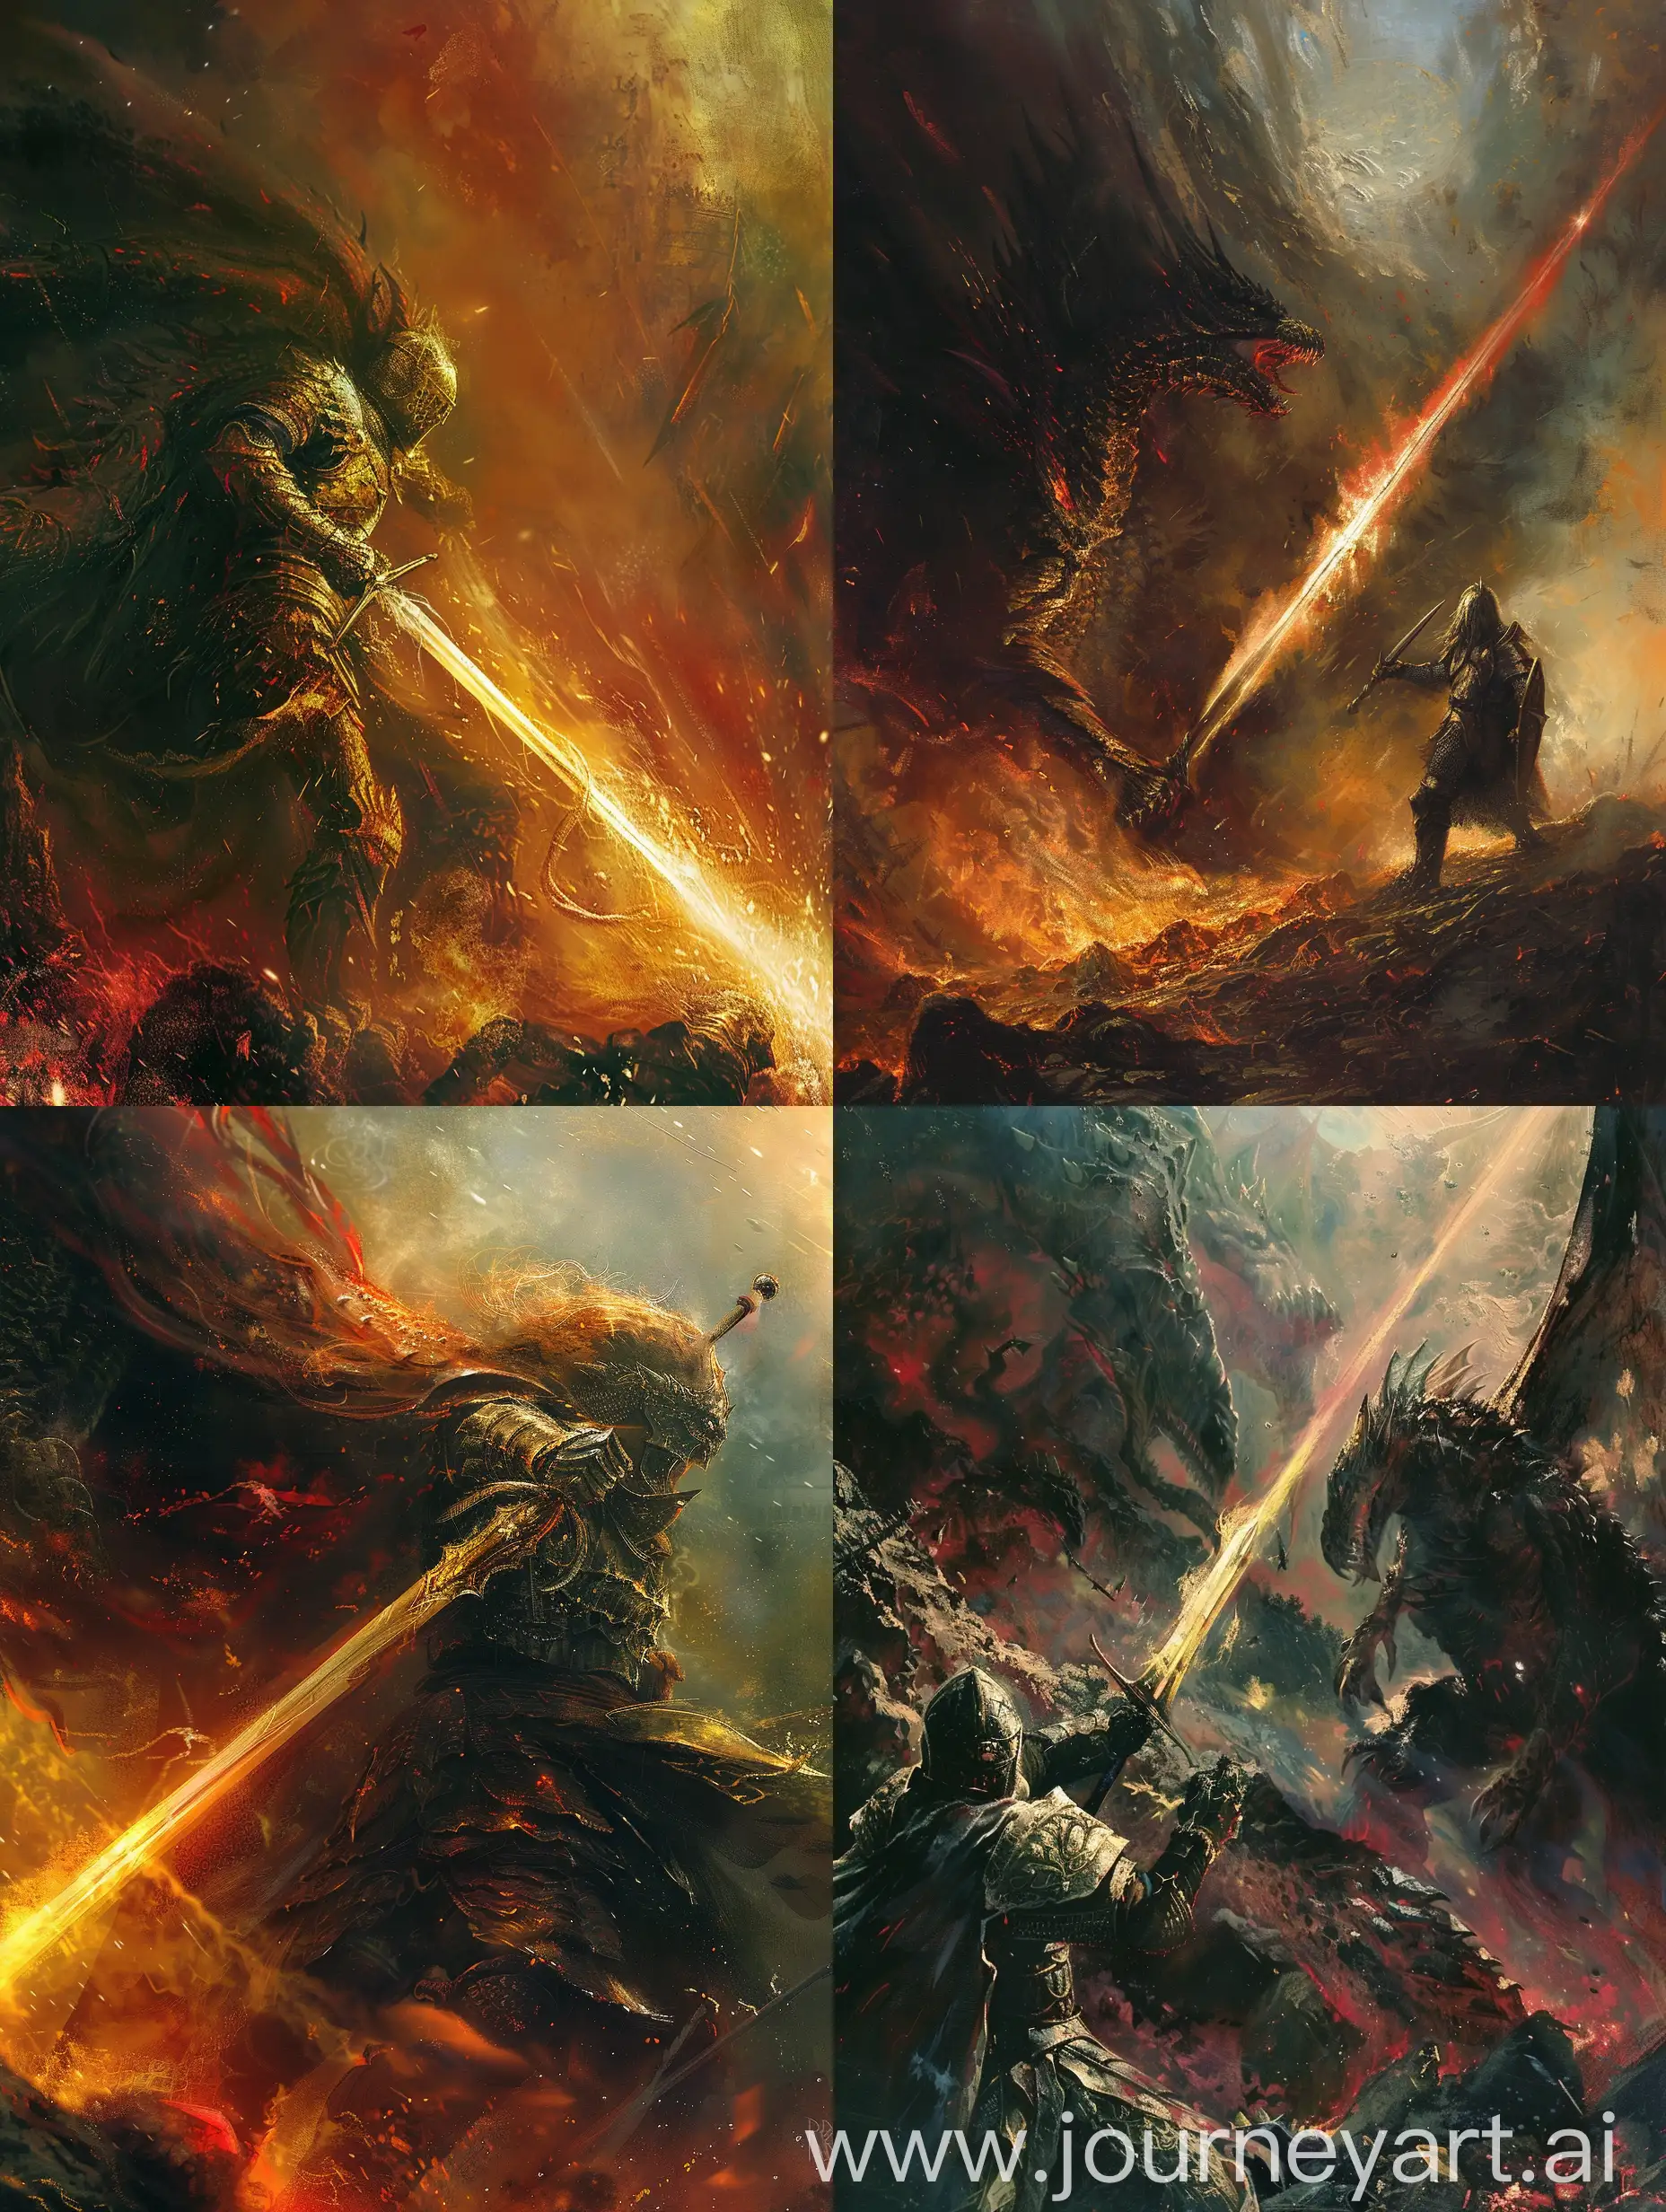 Courageous-Warrior-Battles-Fiery-Dragon-in-Epic-Showdown